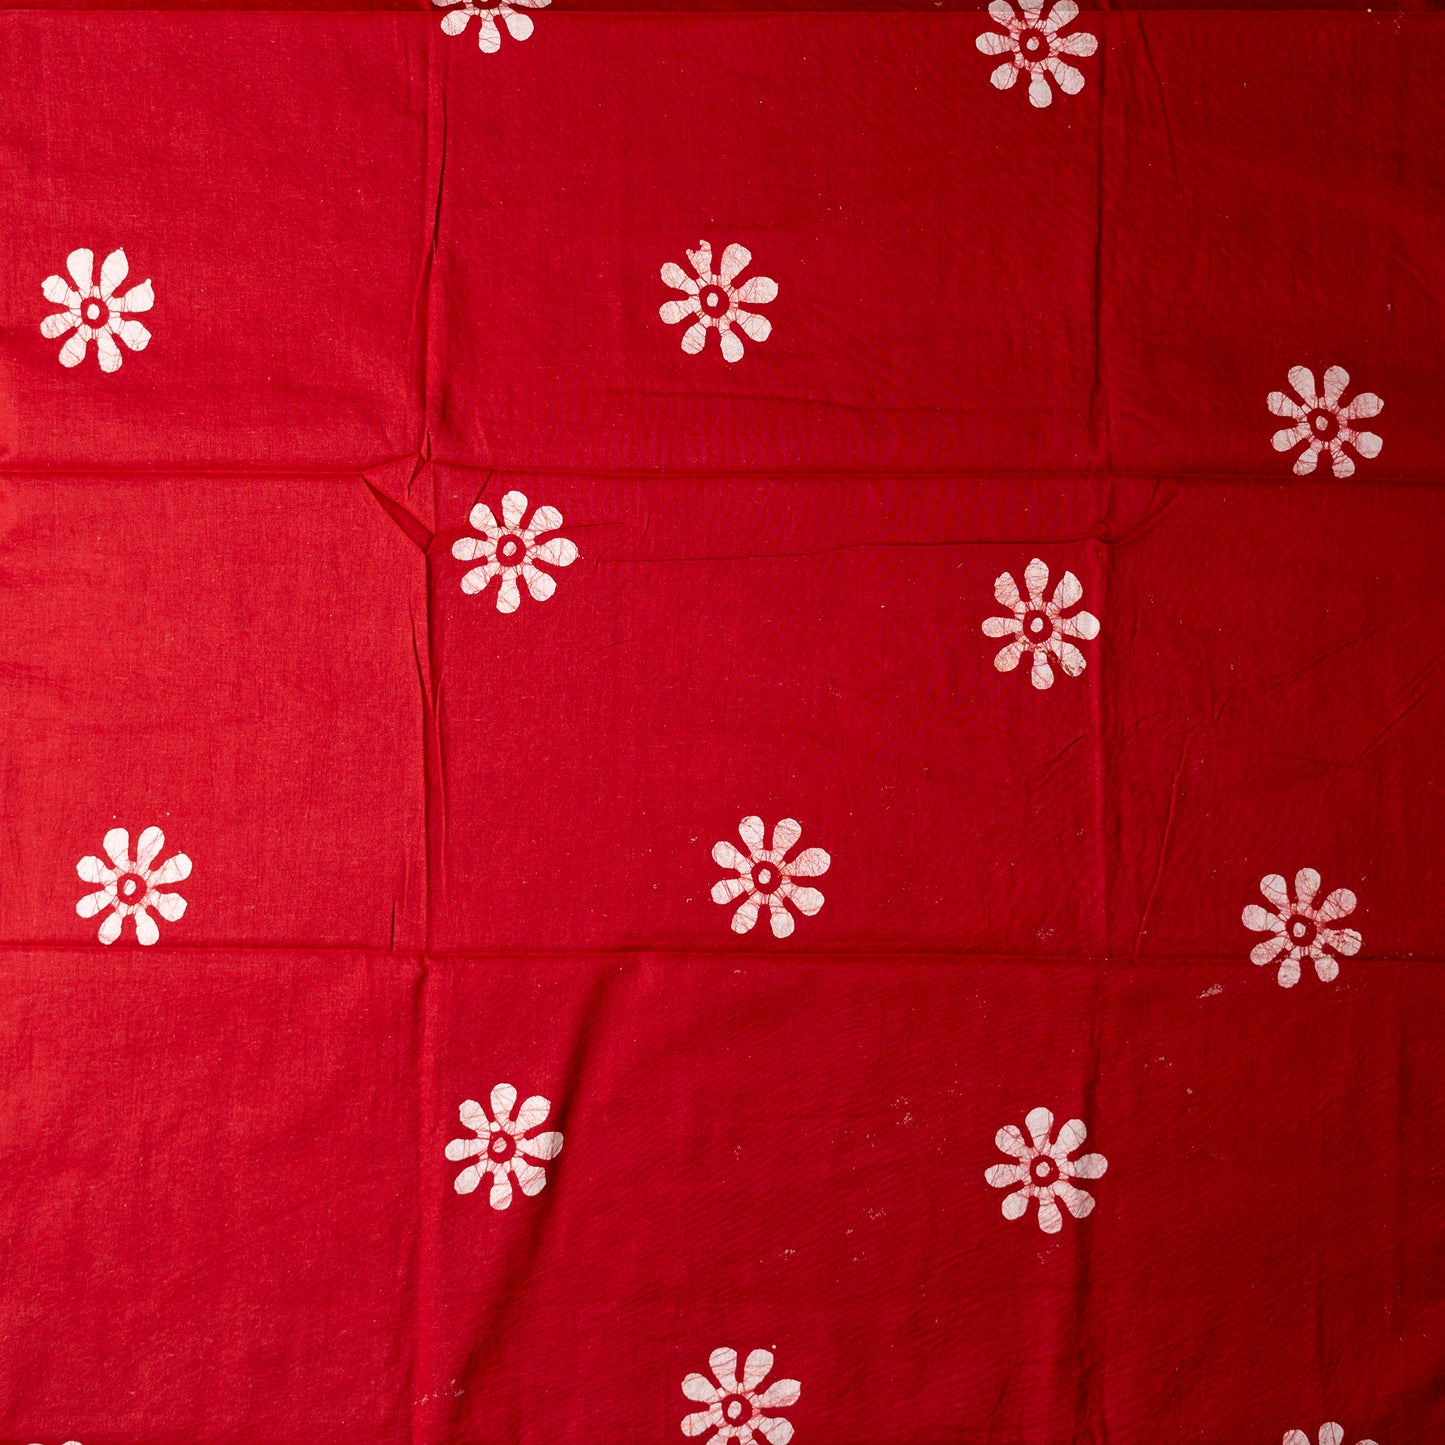 Cotton red color bottom with wax batik prints